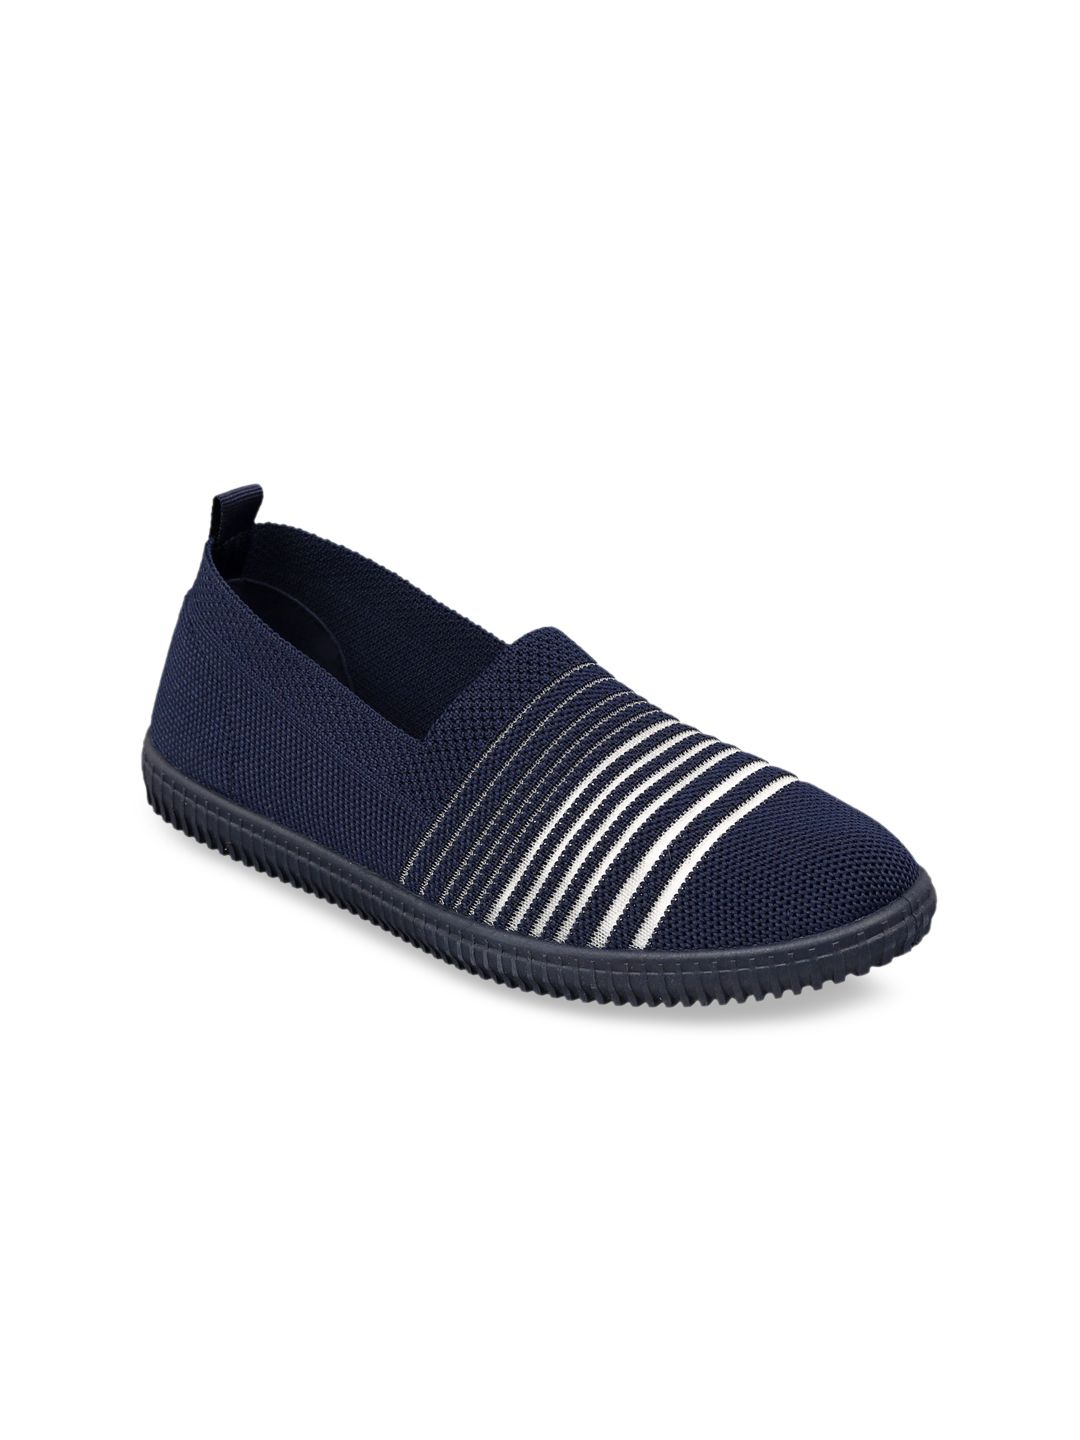 Lavie Women Navy Blue & White Striped Slip-On Sneakers Price in India